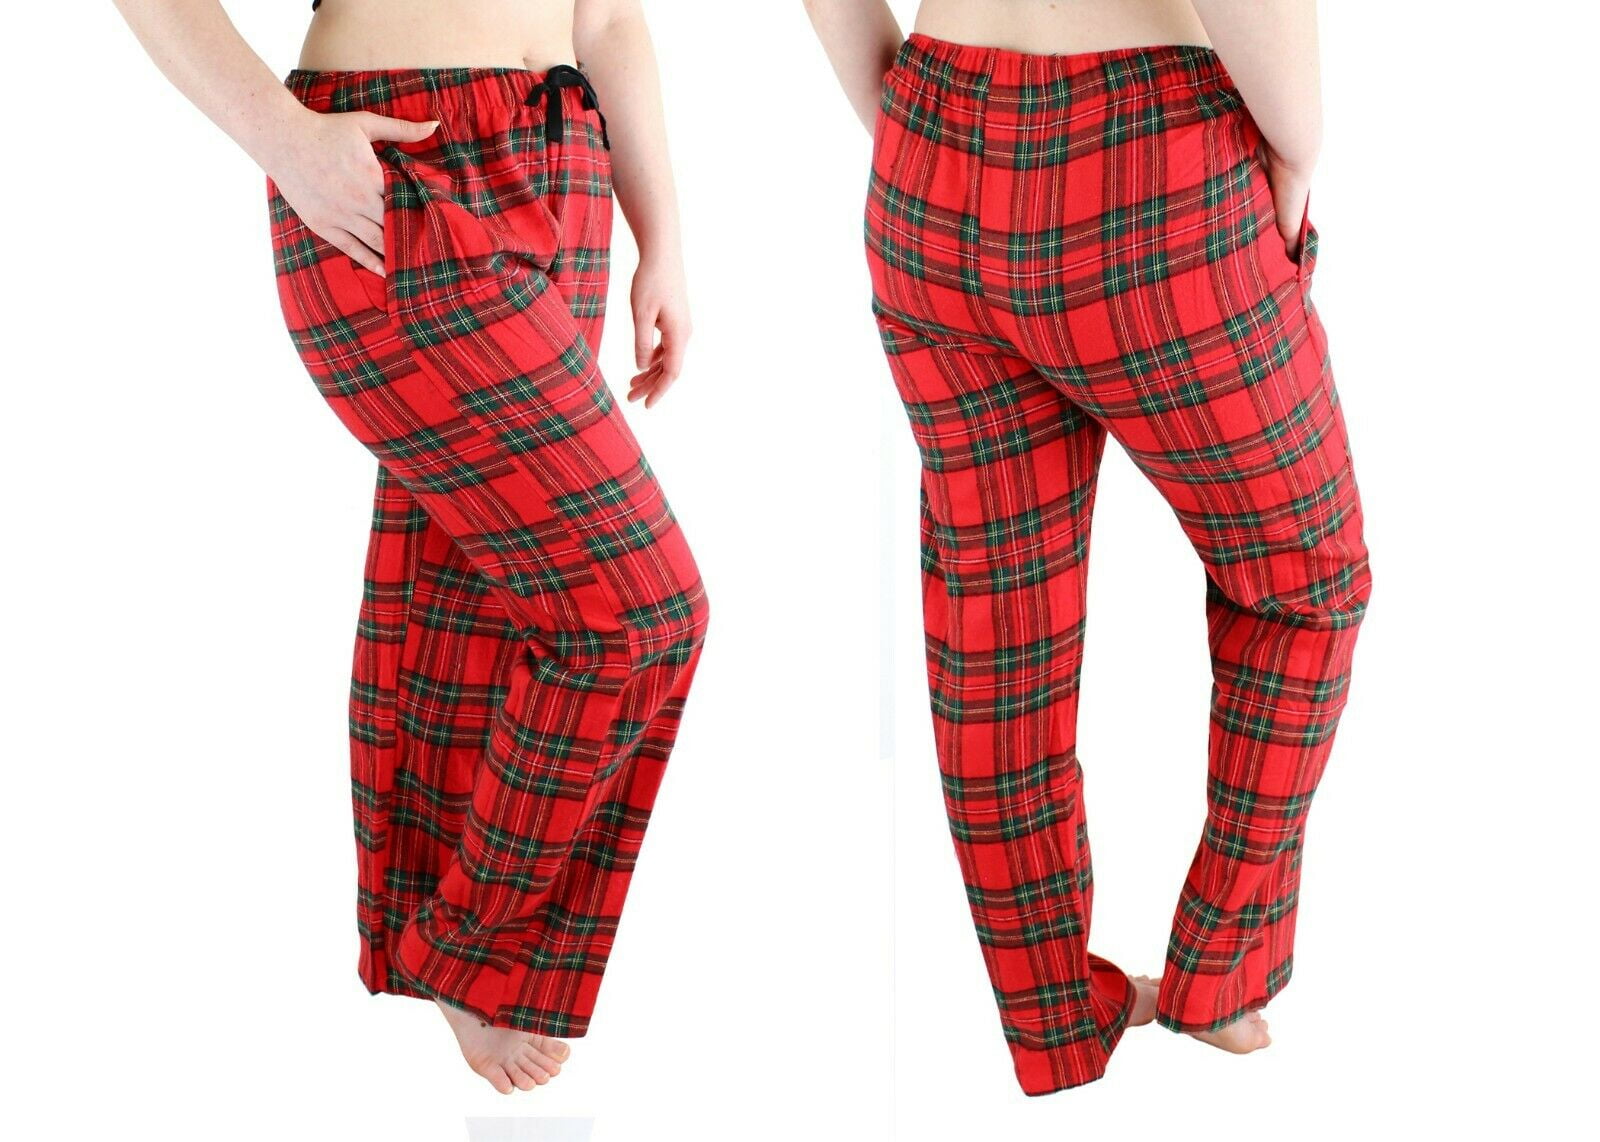 NWT Womens peppermint Fleece Sleep lounge Pants Plaid Pajama Bottoms small